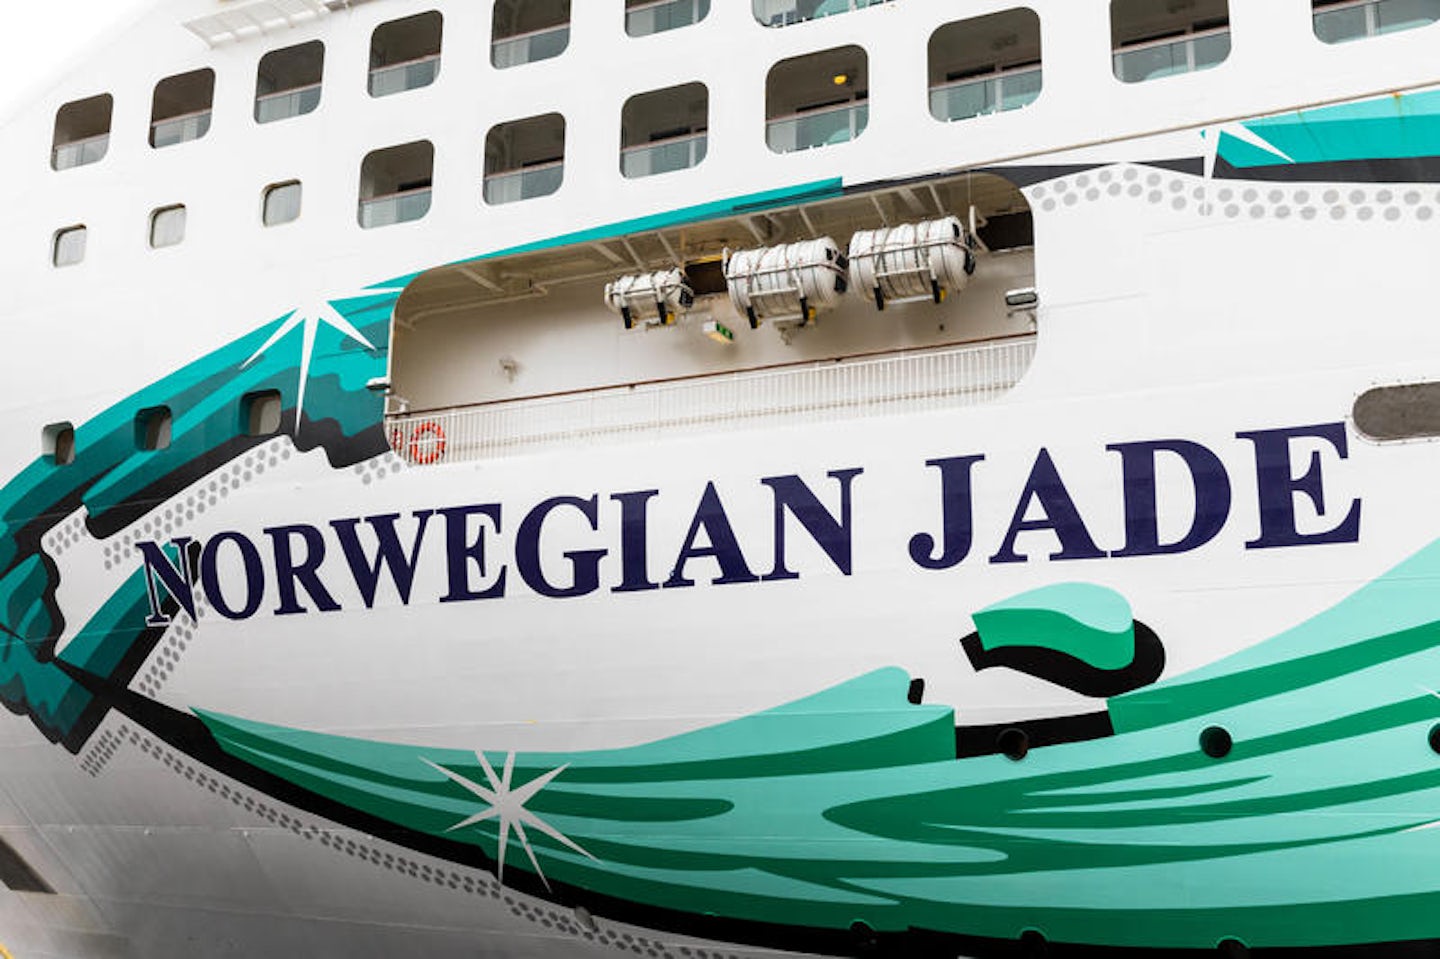 Ship Exterior on Norwegian Jade